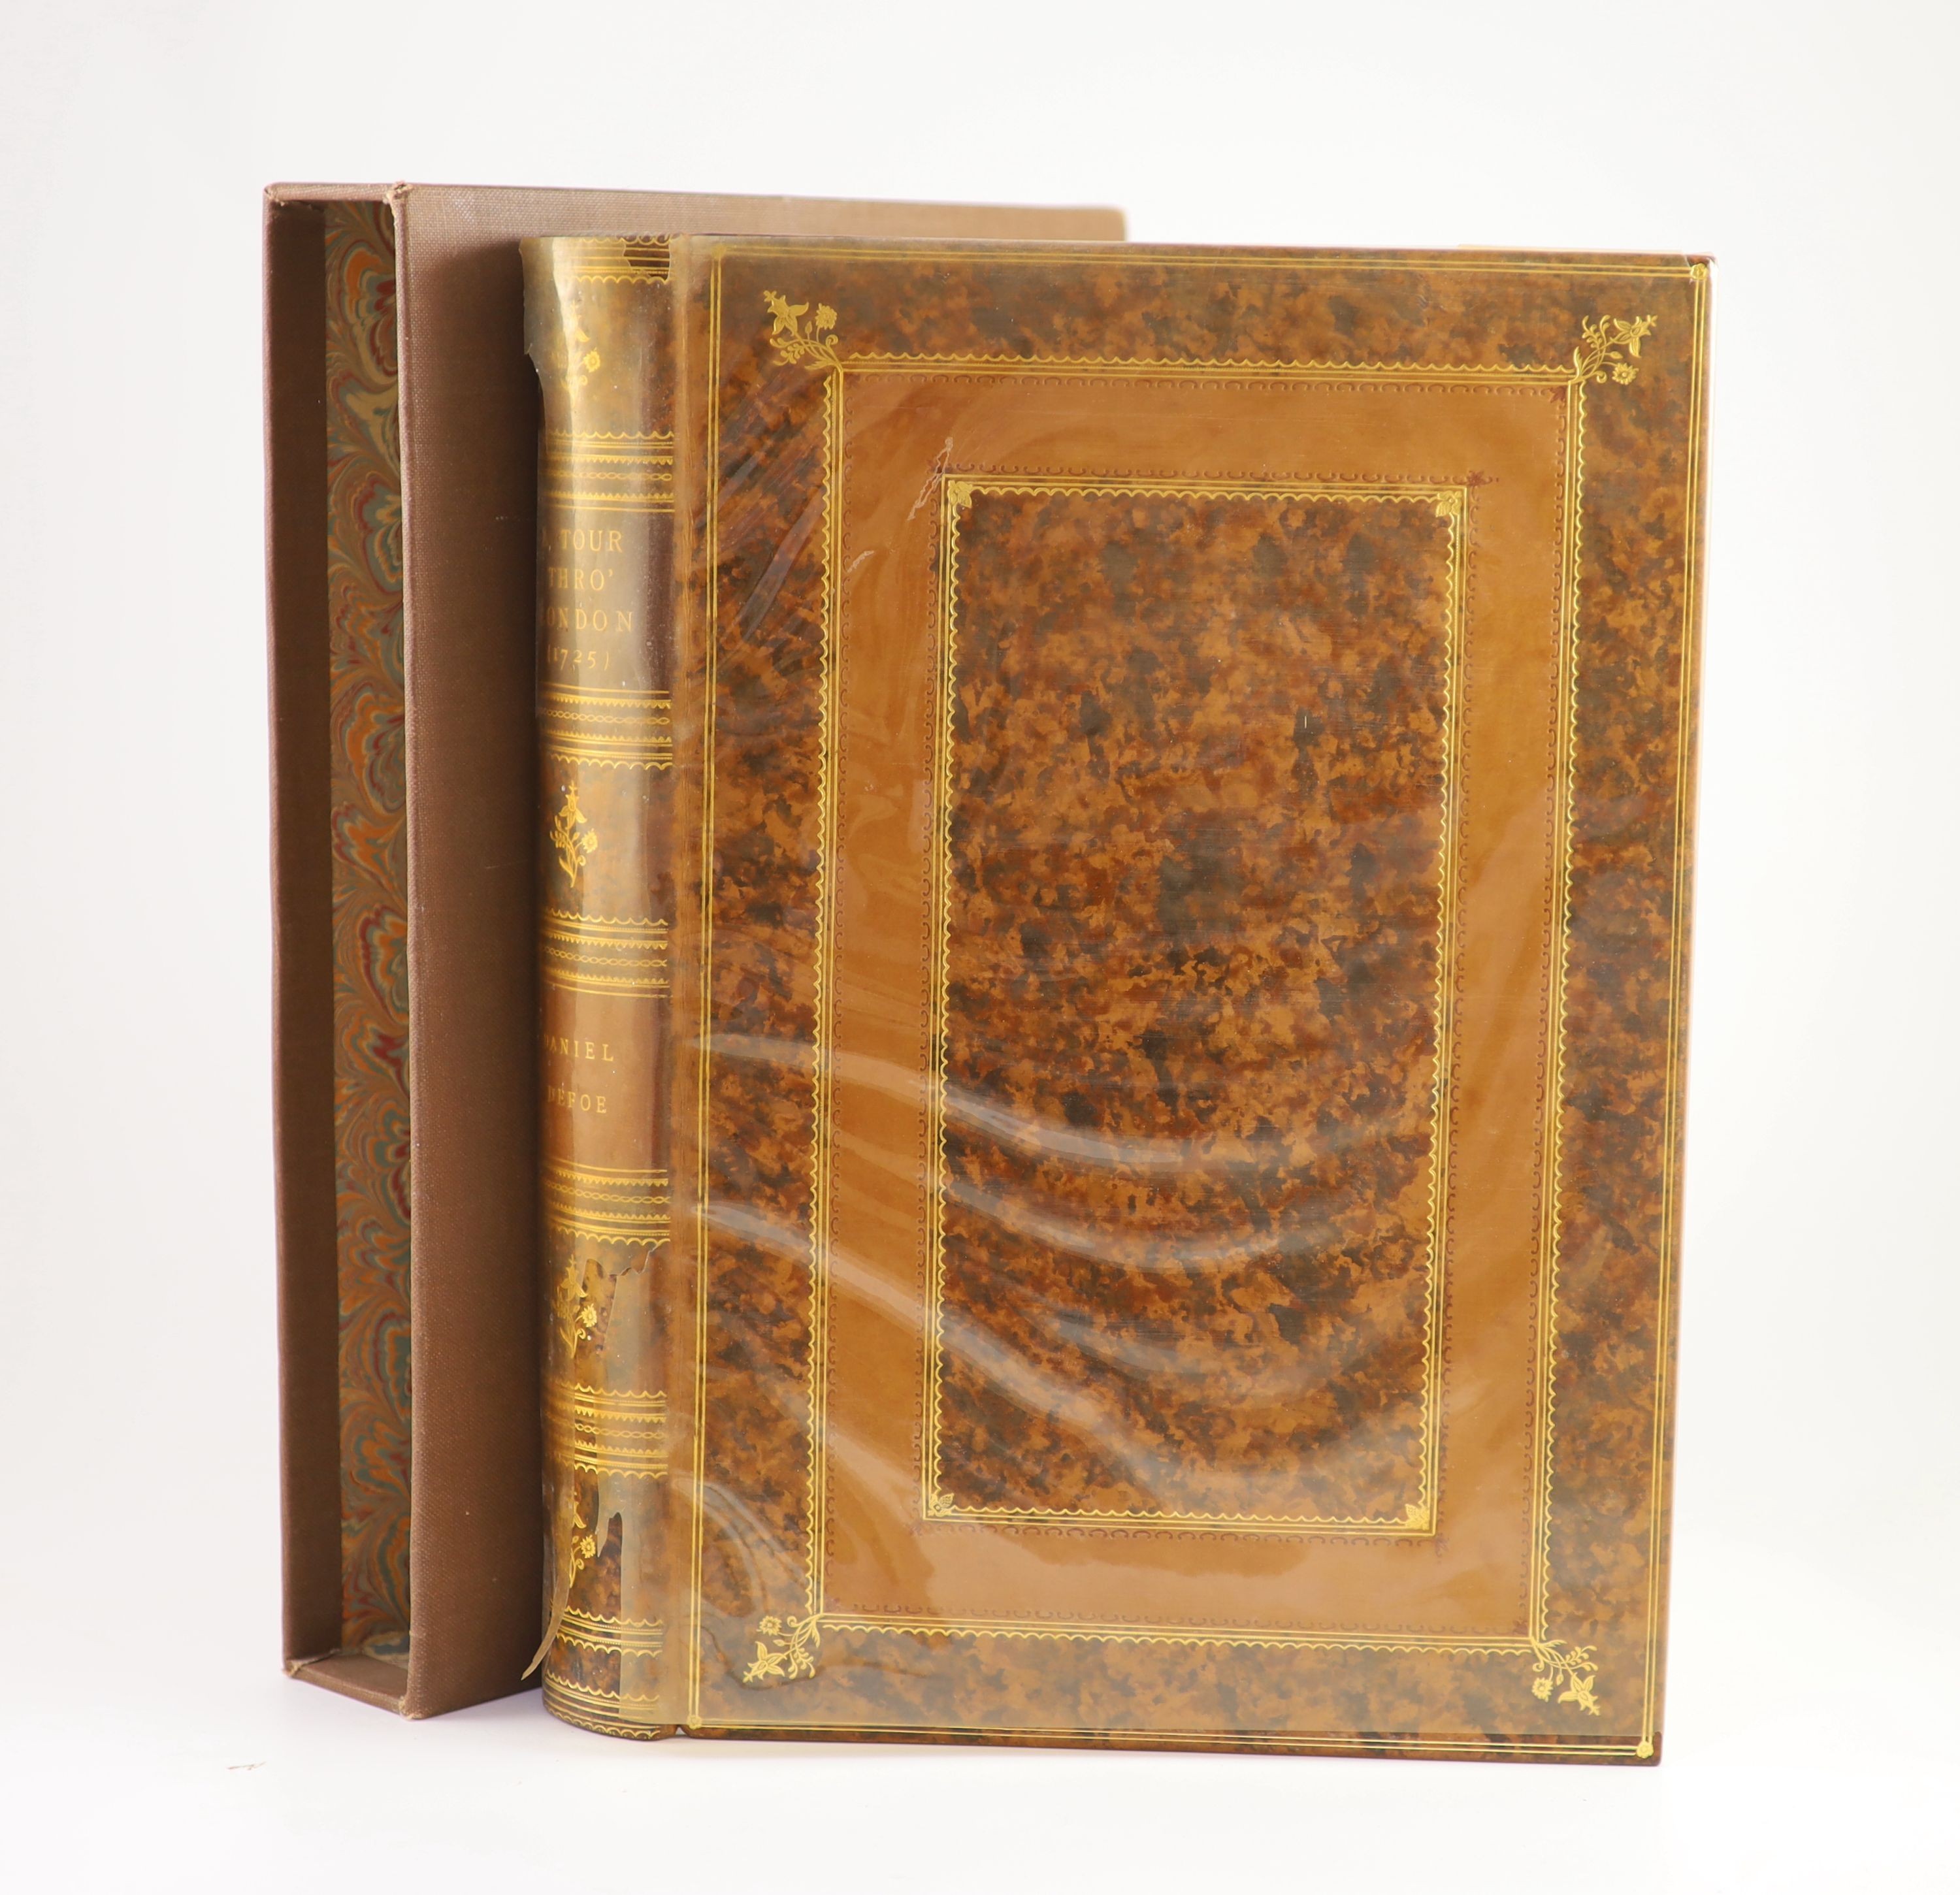 Defoe, Daniel - A Tour thro’ London about the year 1725, folio, calf, B.T. Batsford, London, 1929, with slip case